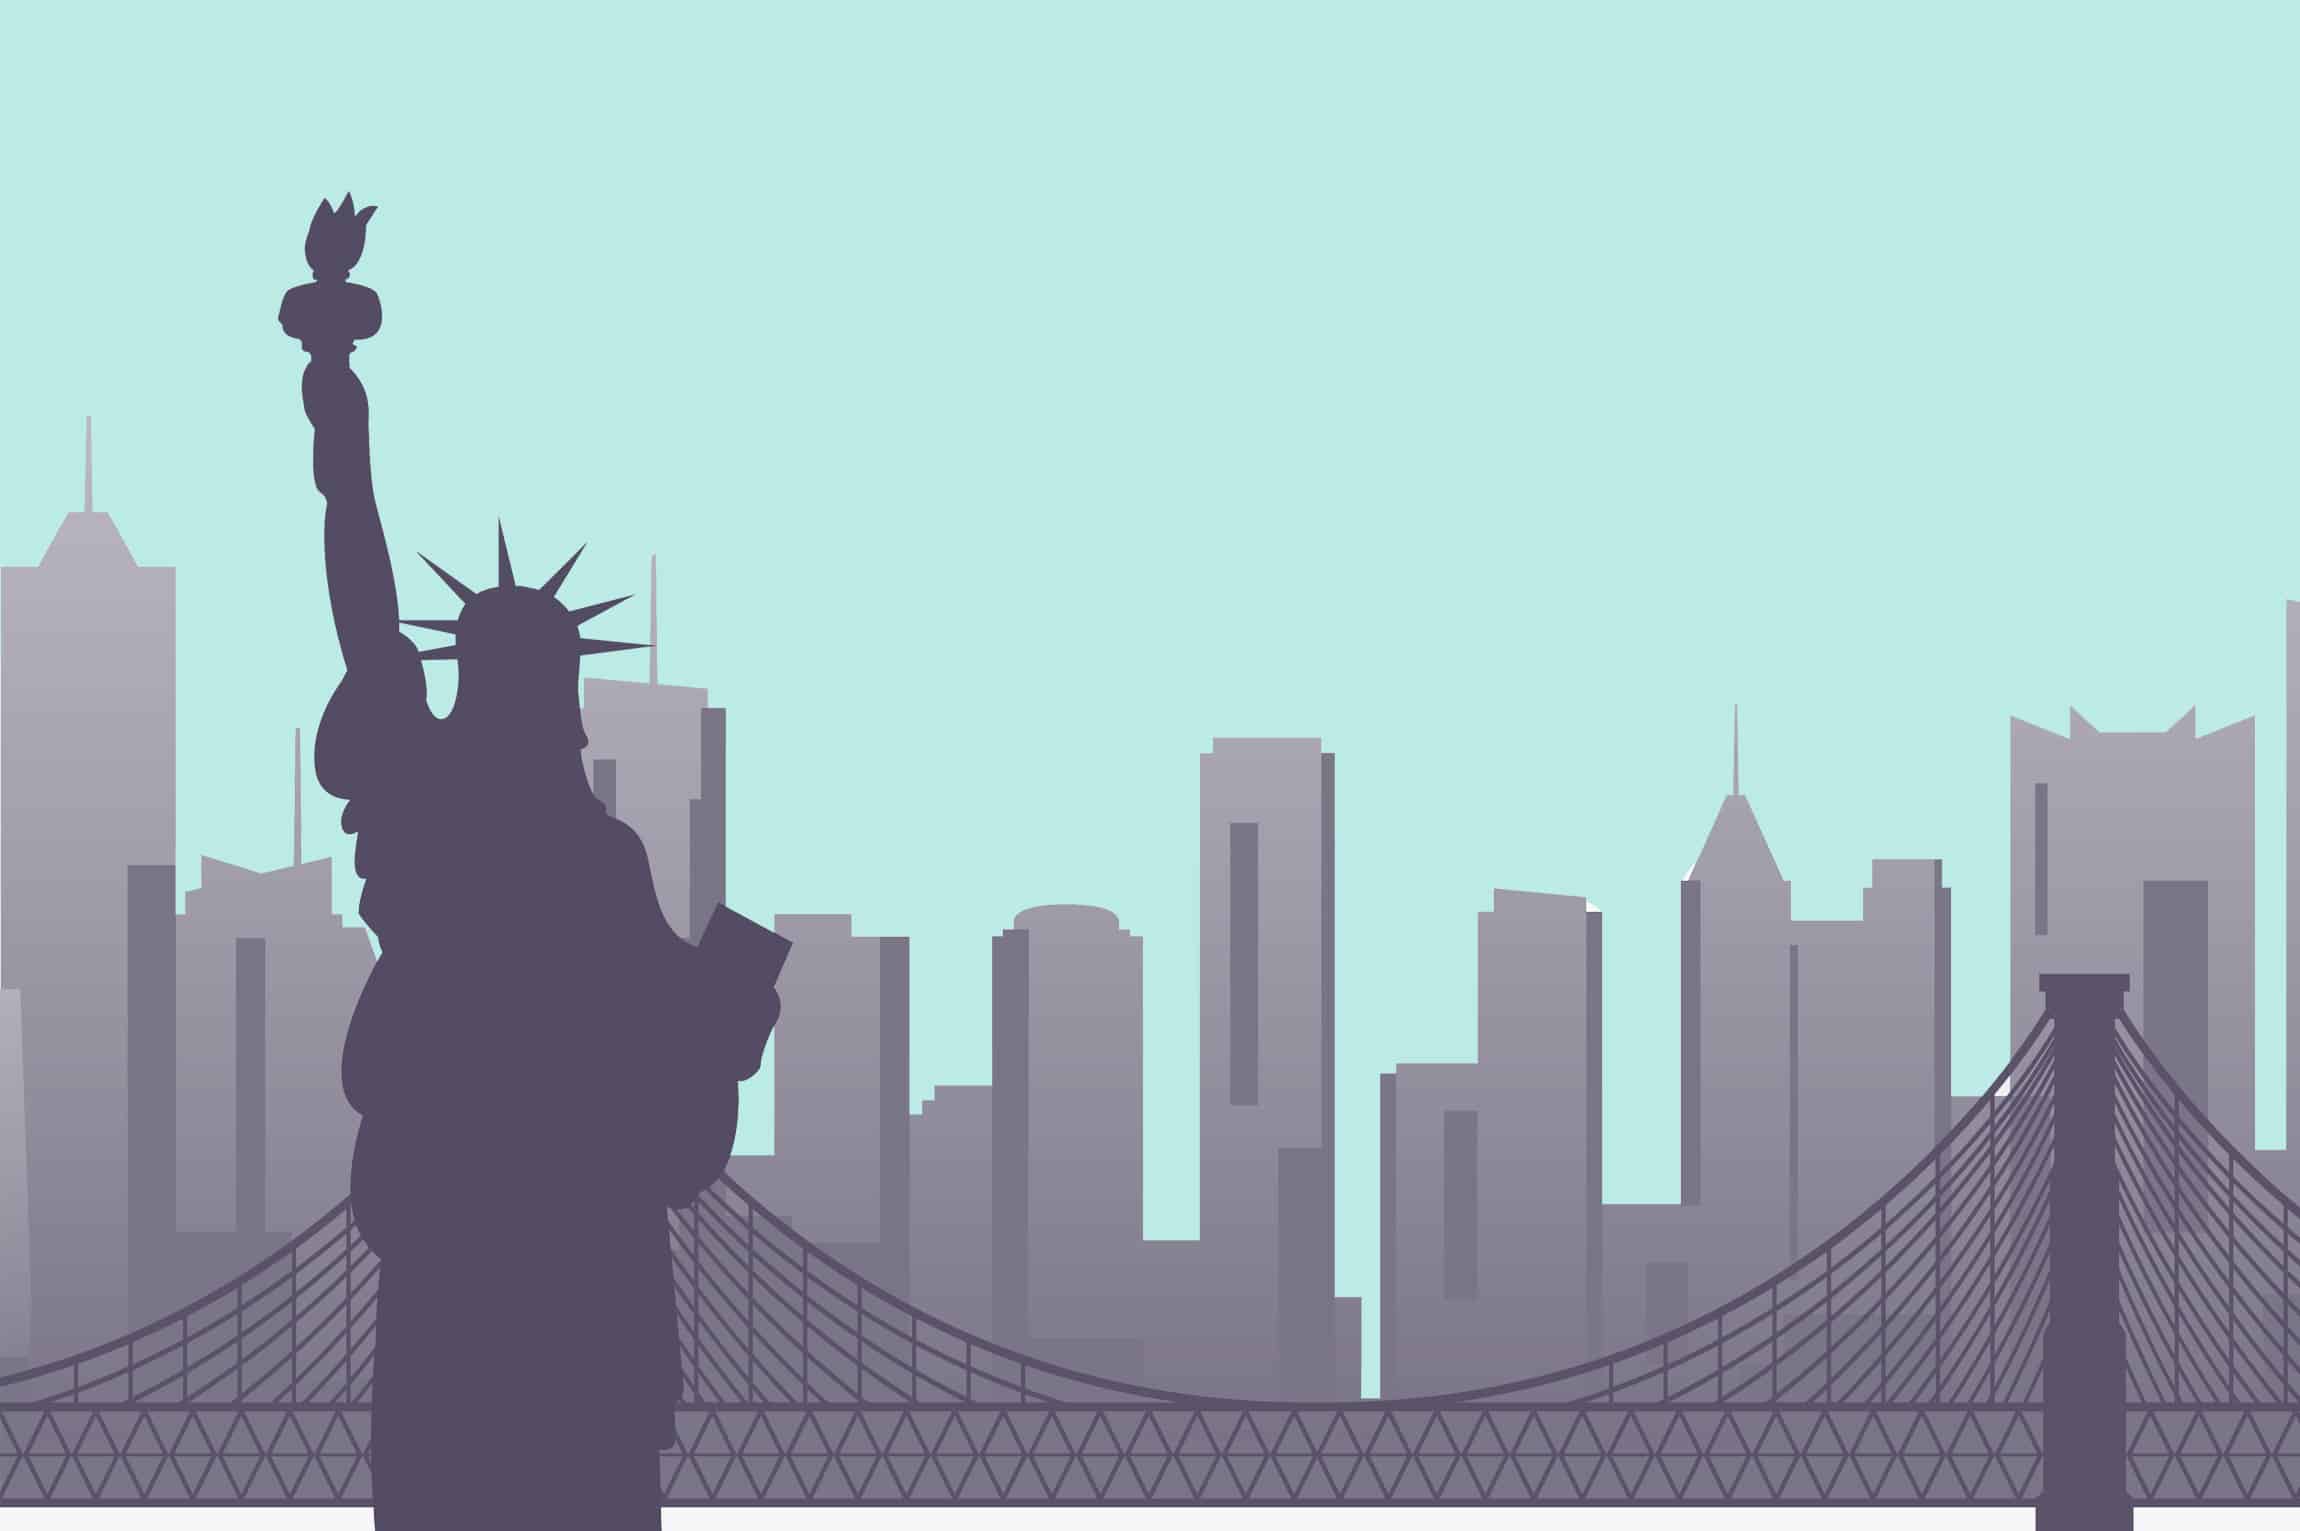 The New York skyline on a blue background